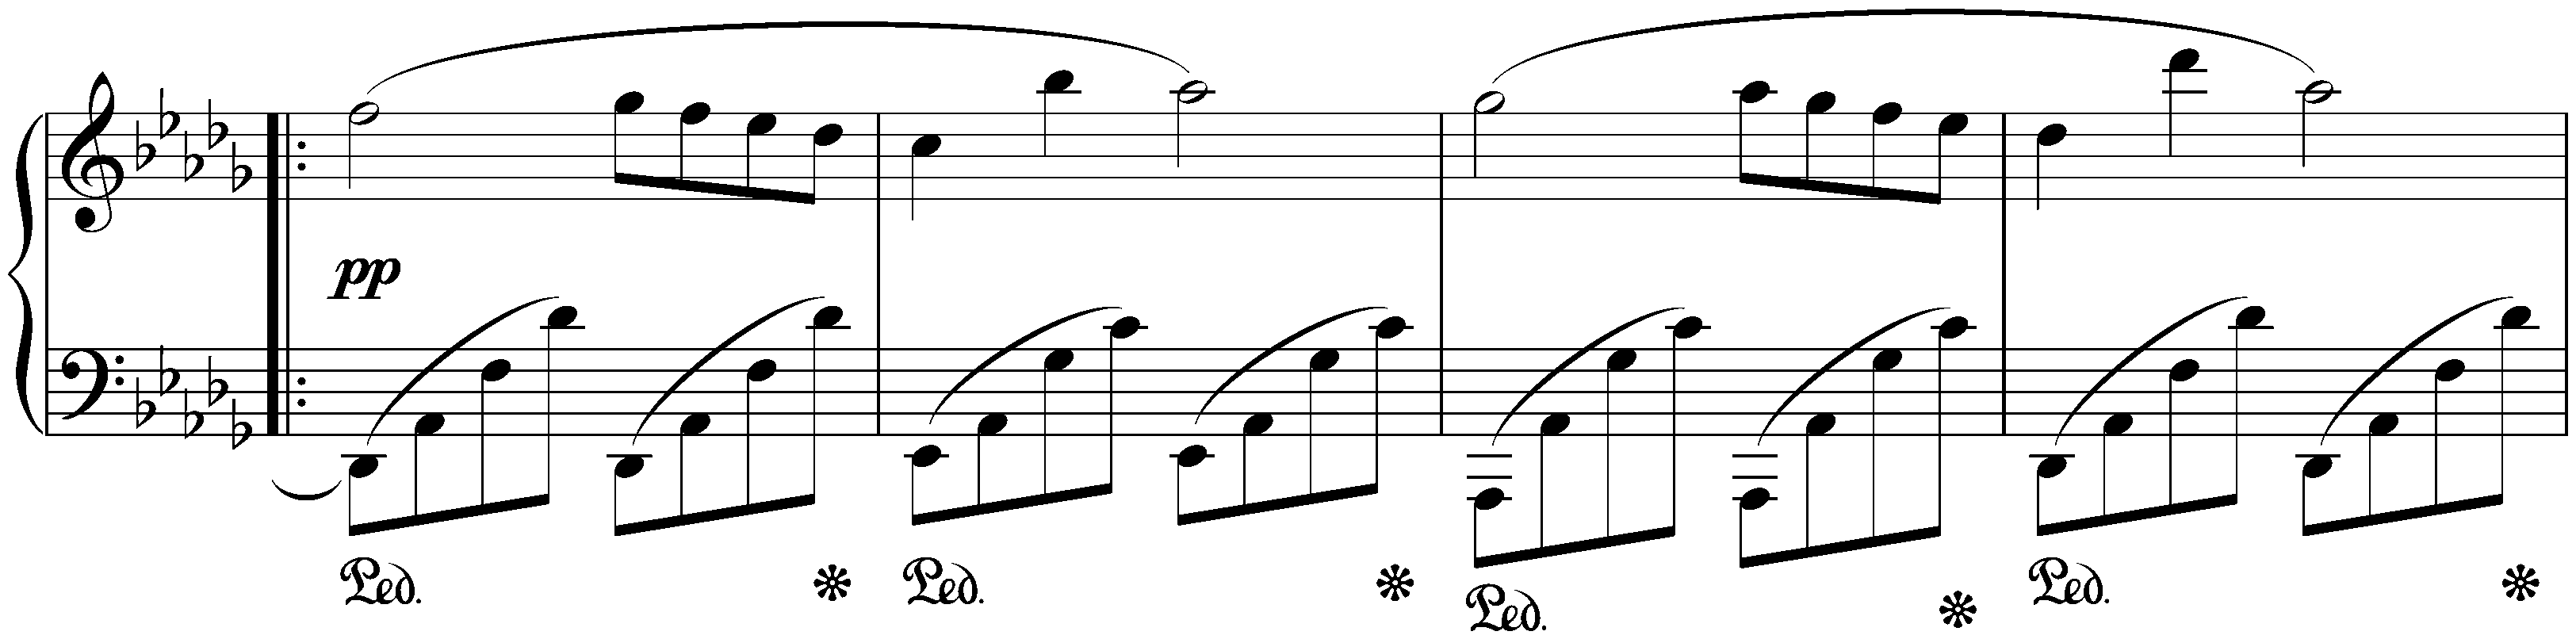 Sonata no. 2 in B-flat minor, op. 35; 3. Marche funèbre: Lento